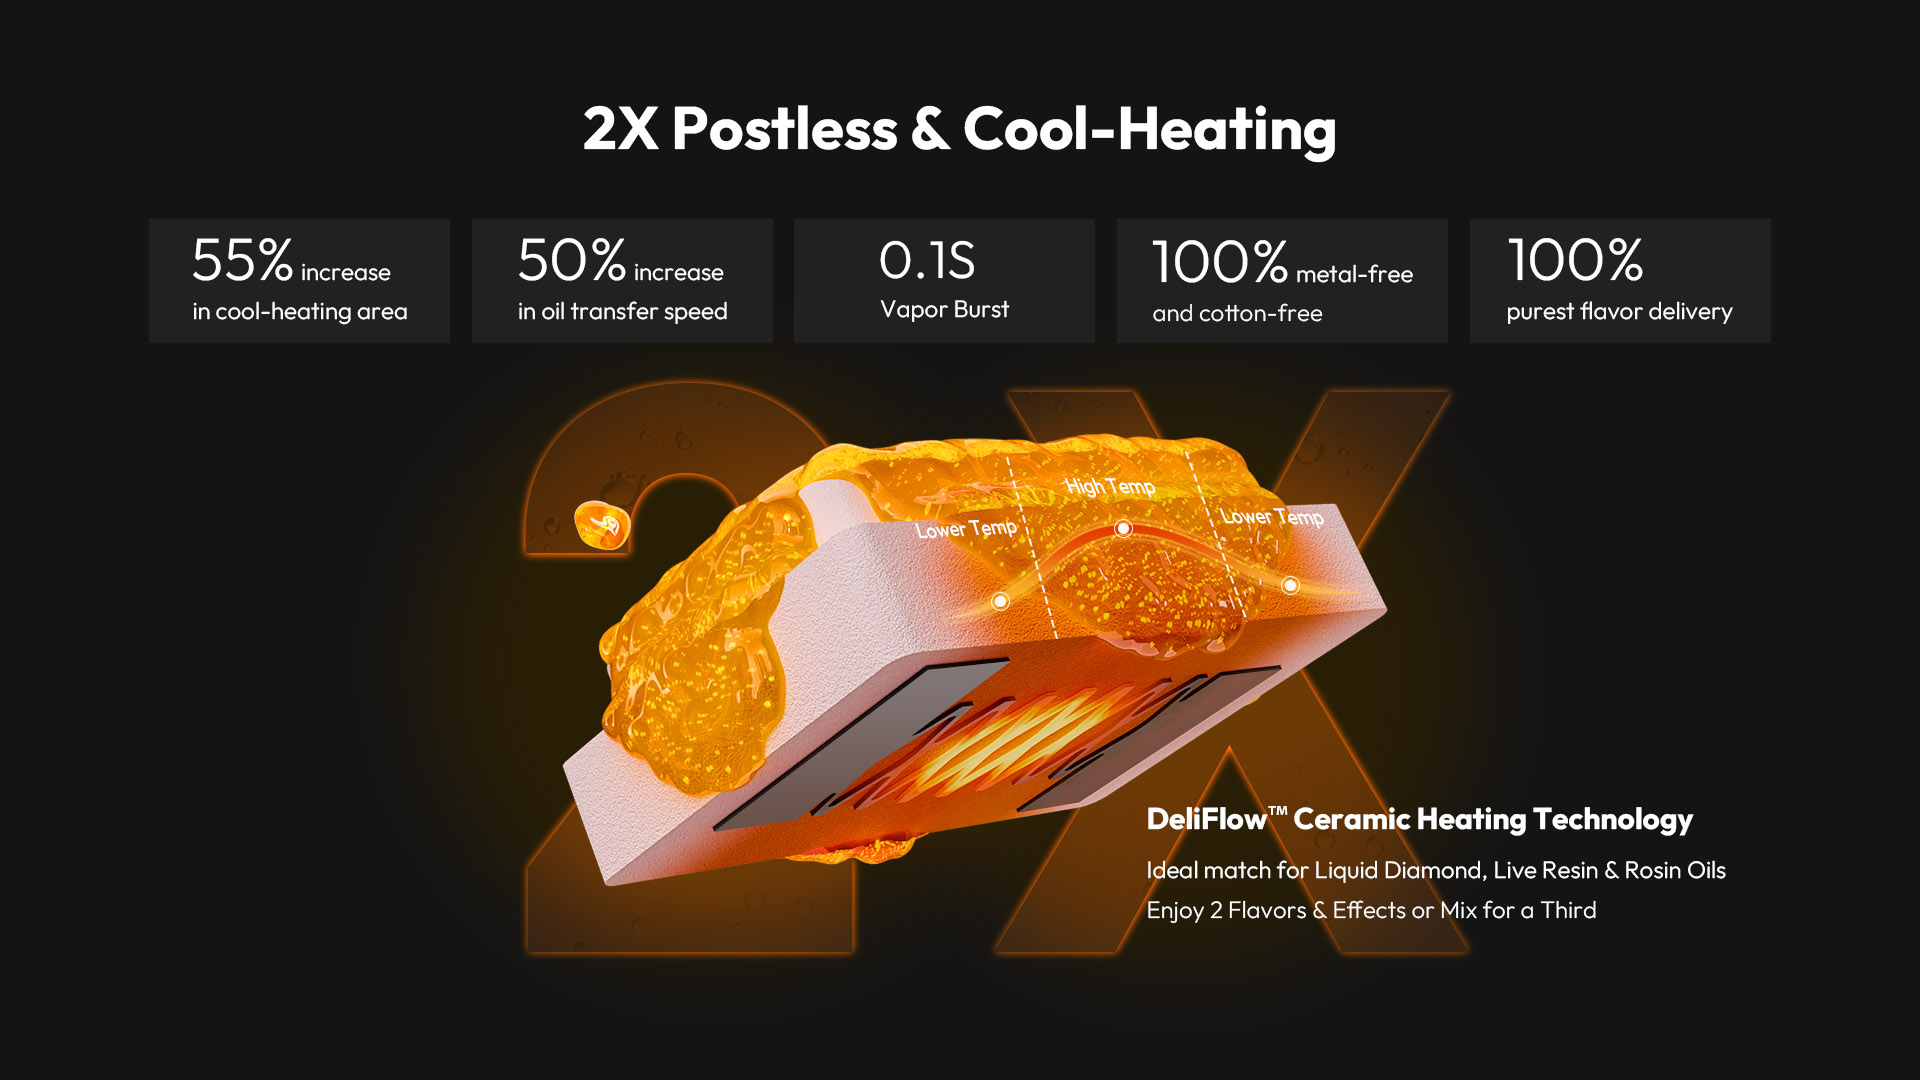 2X Postless & Cool-Heating